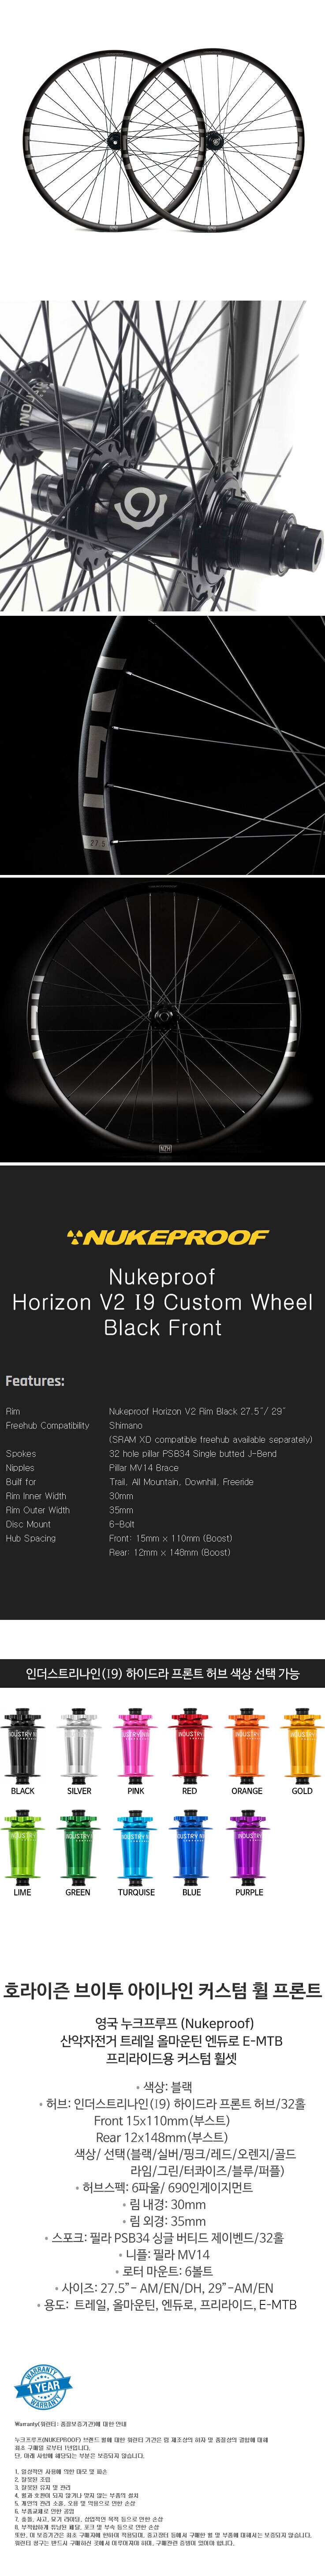 20_Horizon_V2_I9_Custom_Wheel_ 